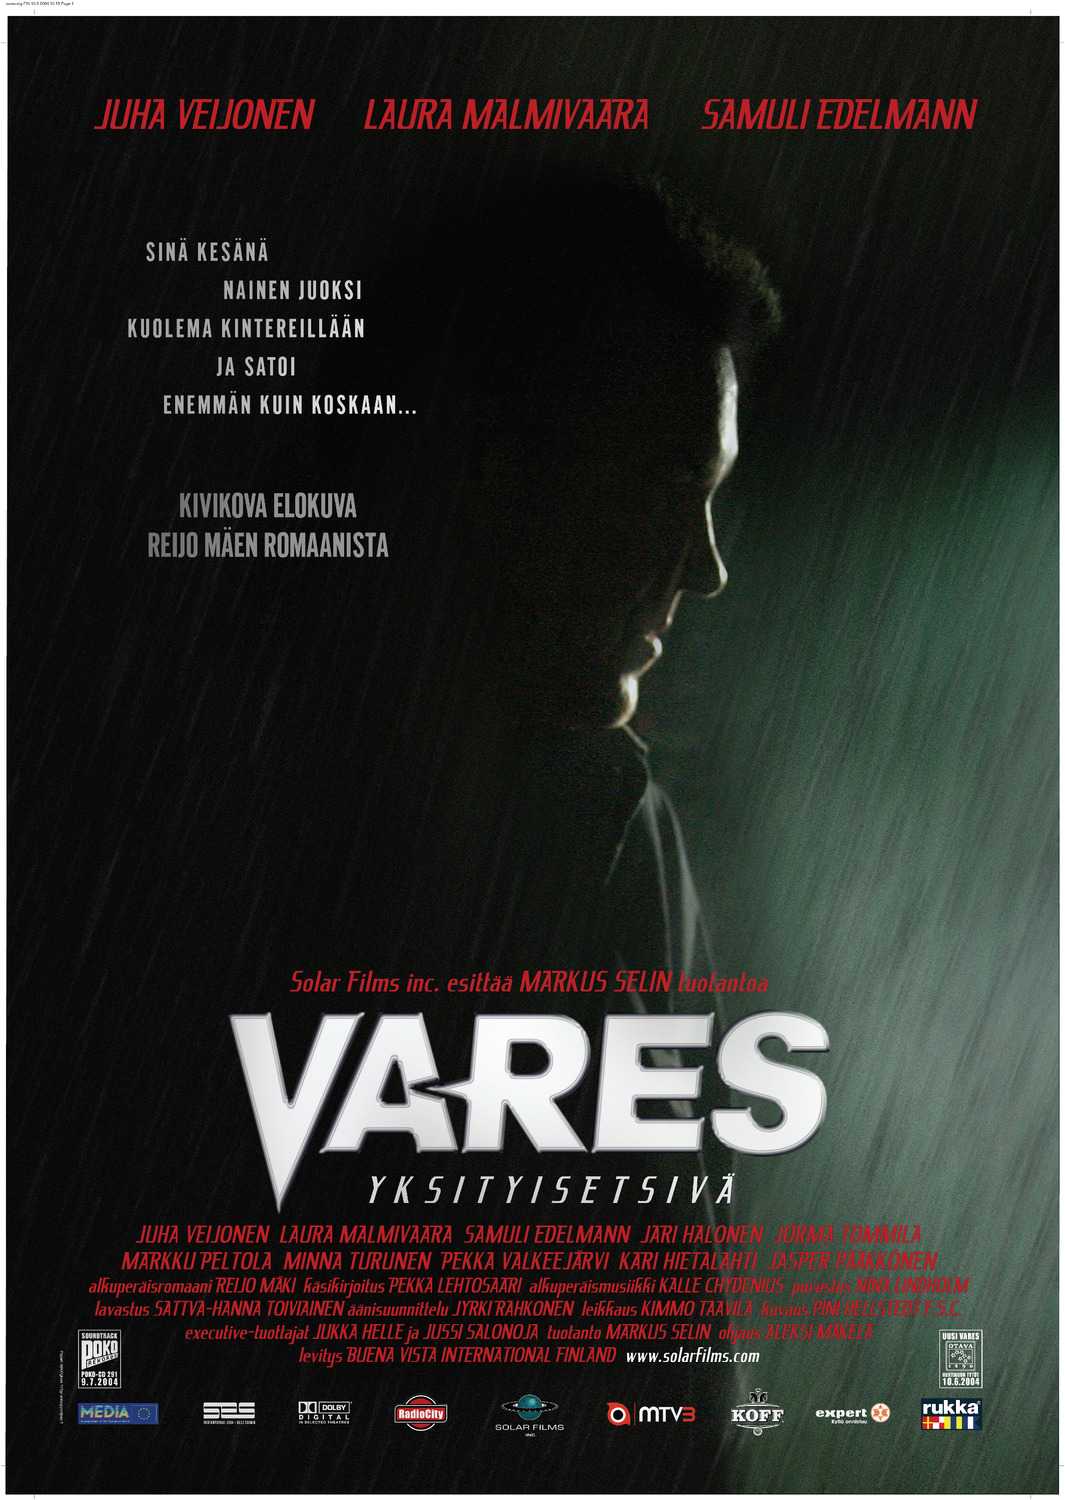 Extra Large Movie Poster Image for Vares - yksityisetsivä 